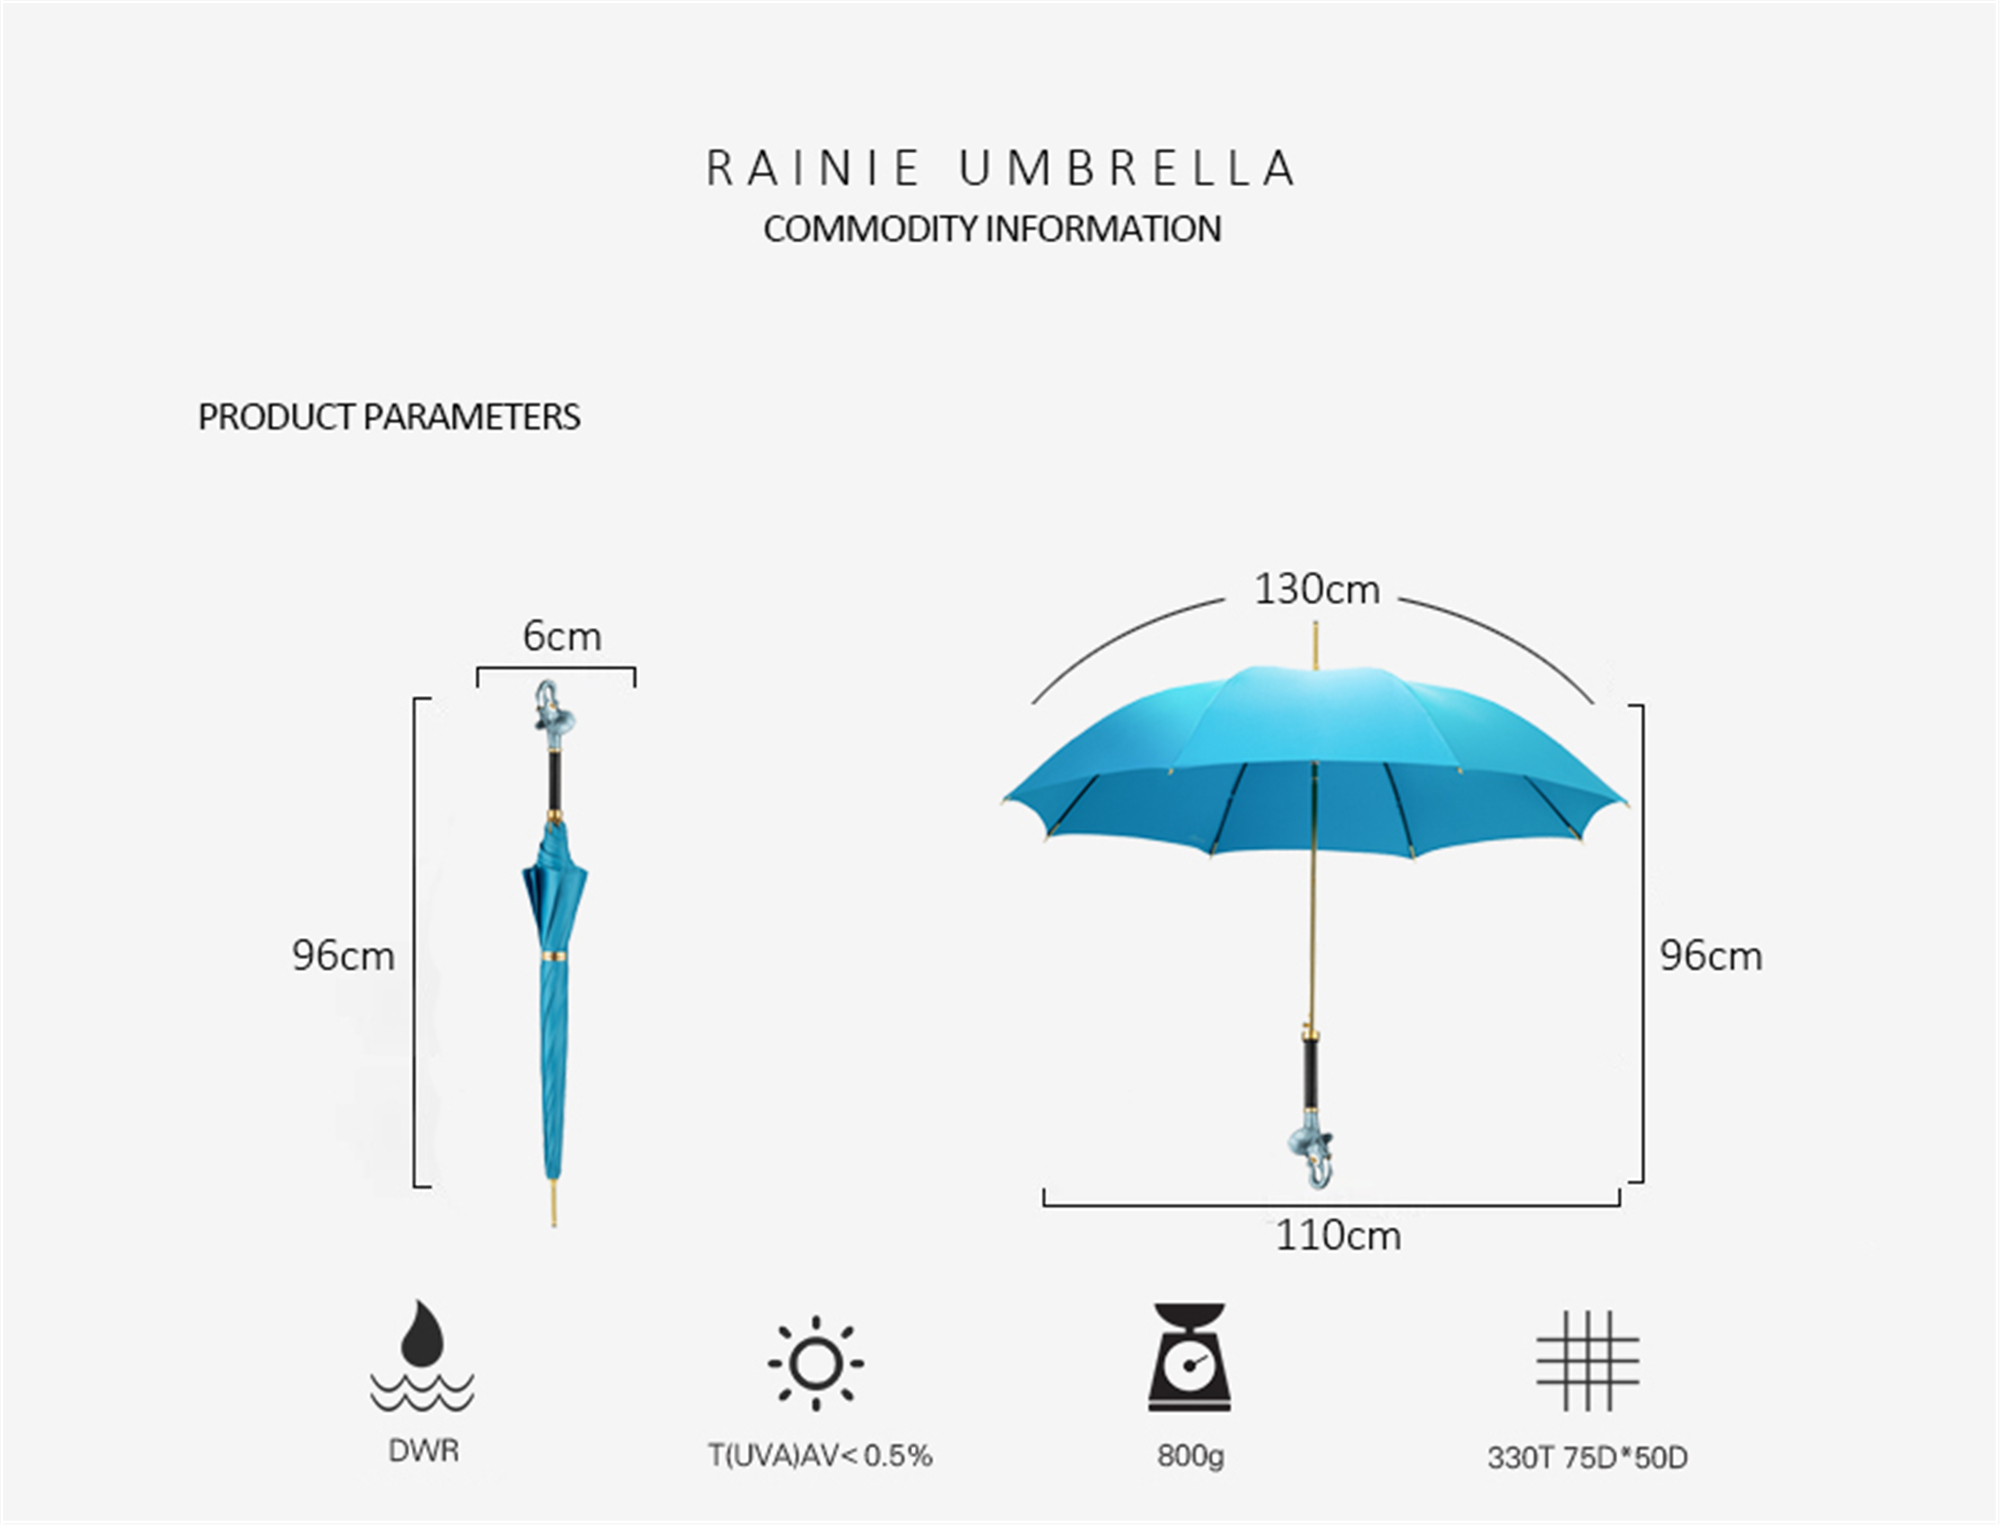 Enamelled Mammoth umbrella